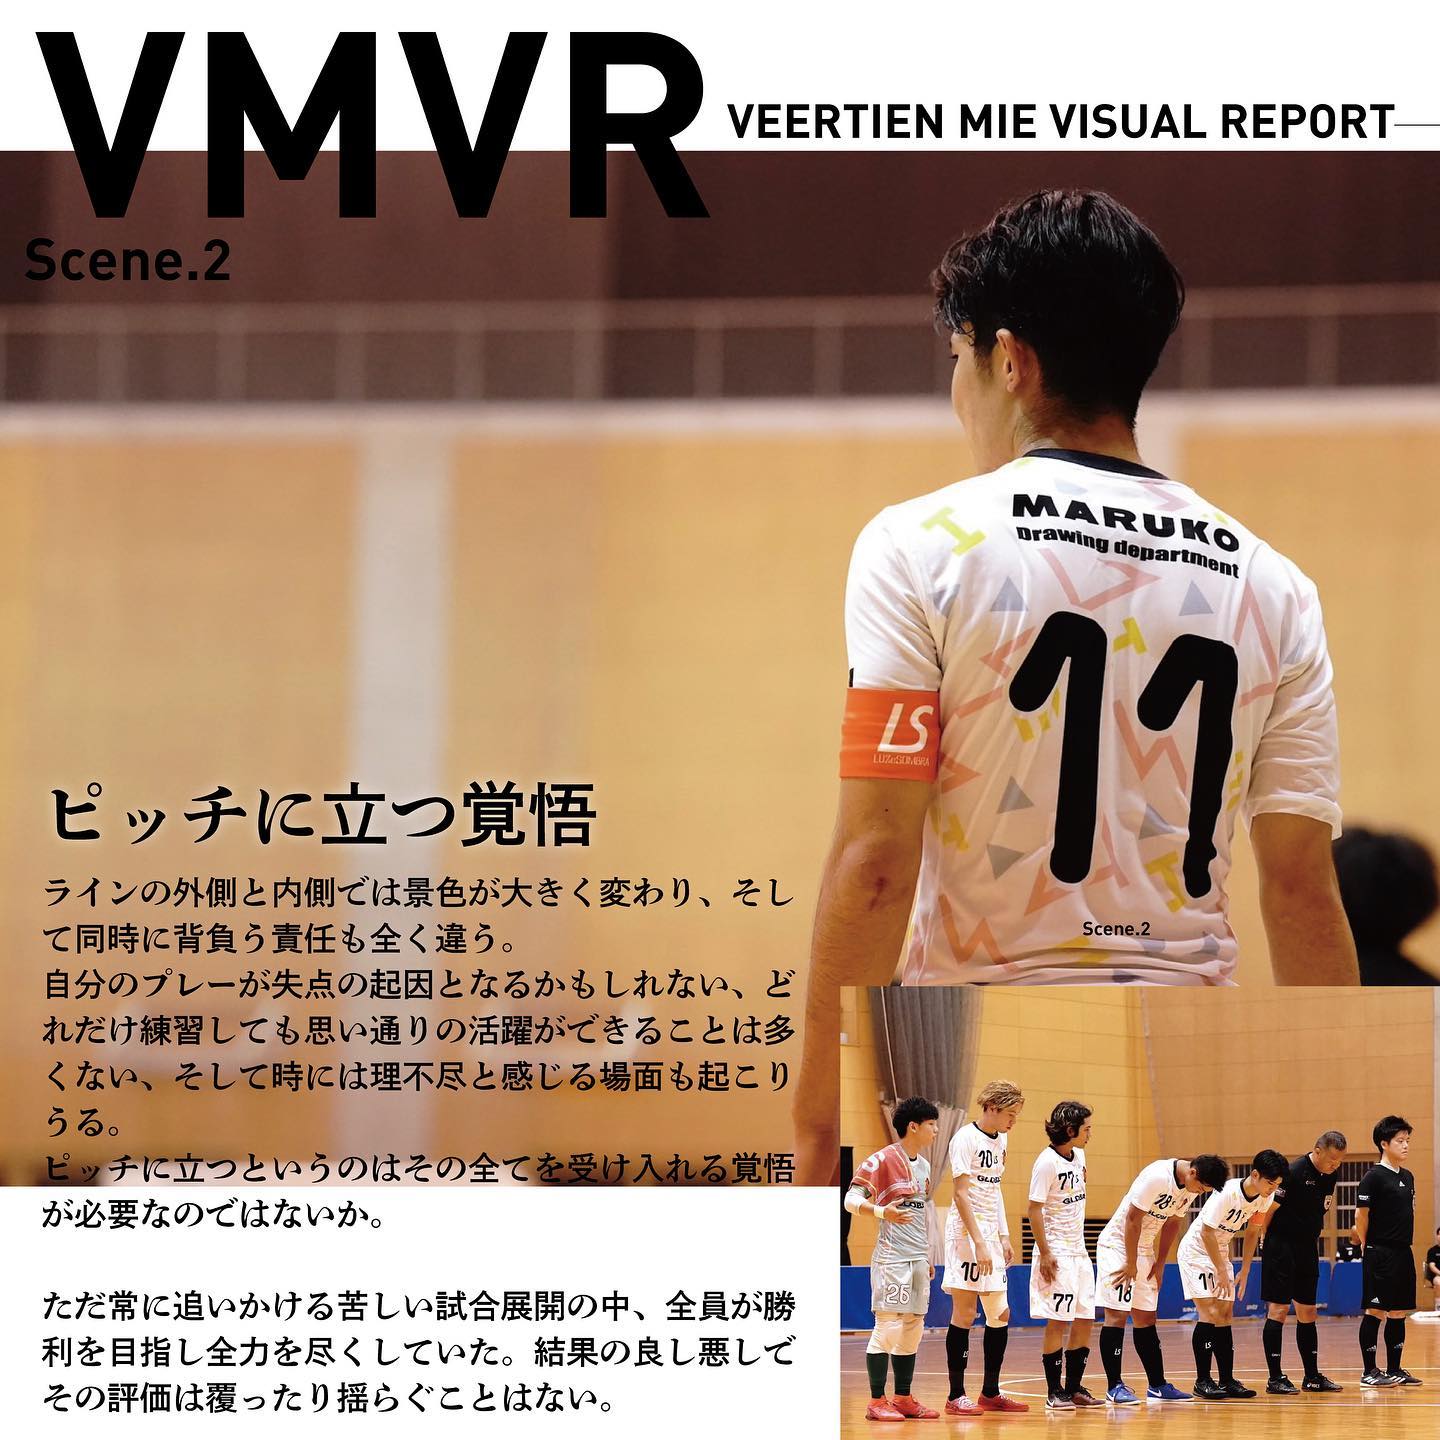 【Match Report】-VMVR scene.2-